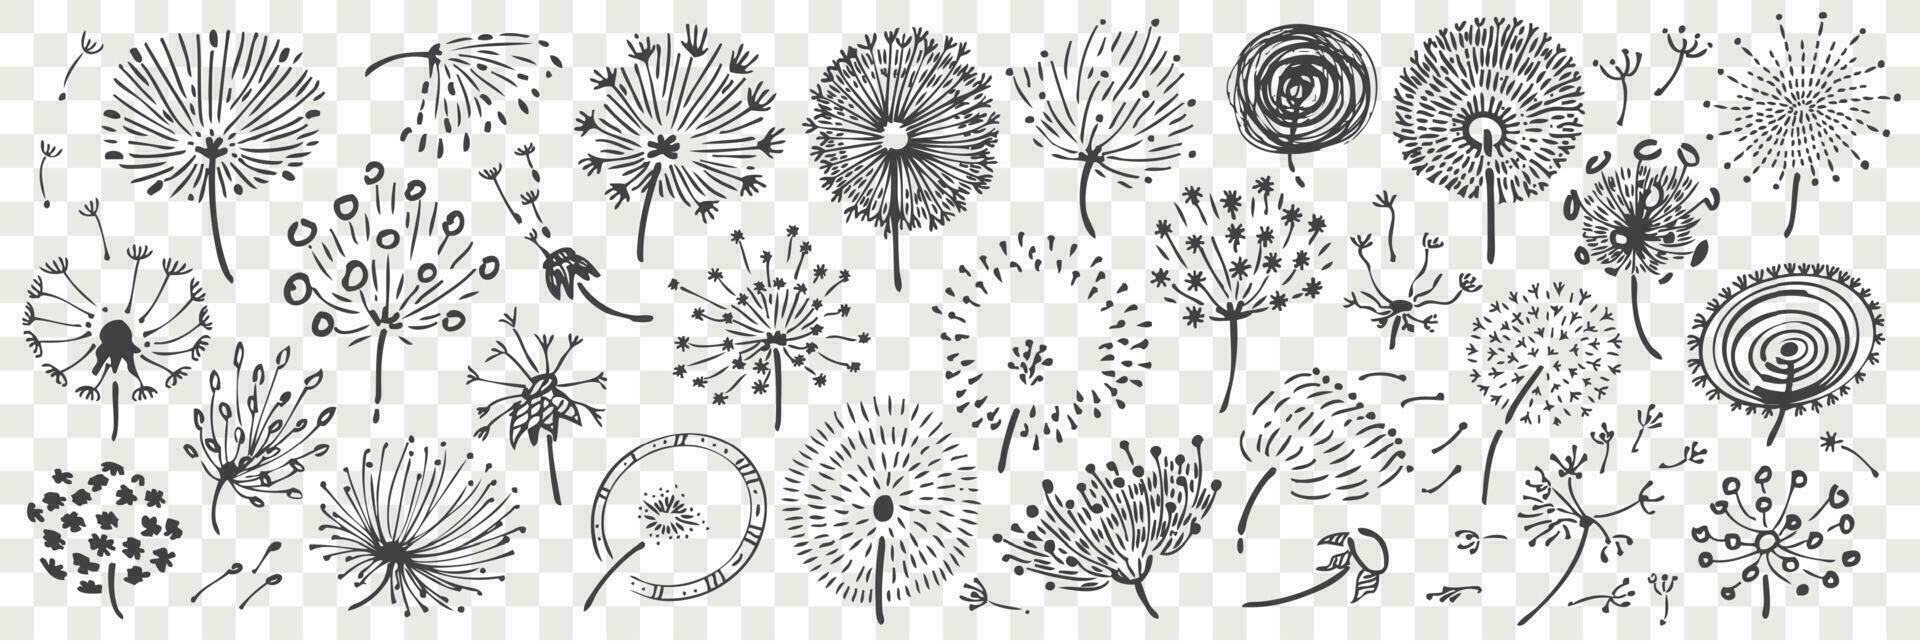 Hand drawn dandelion doodle set. vector